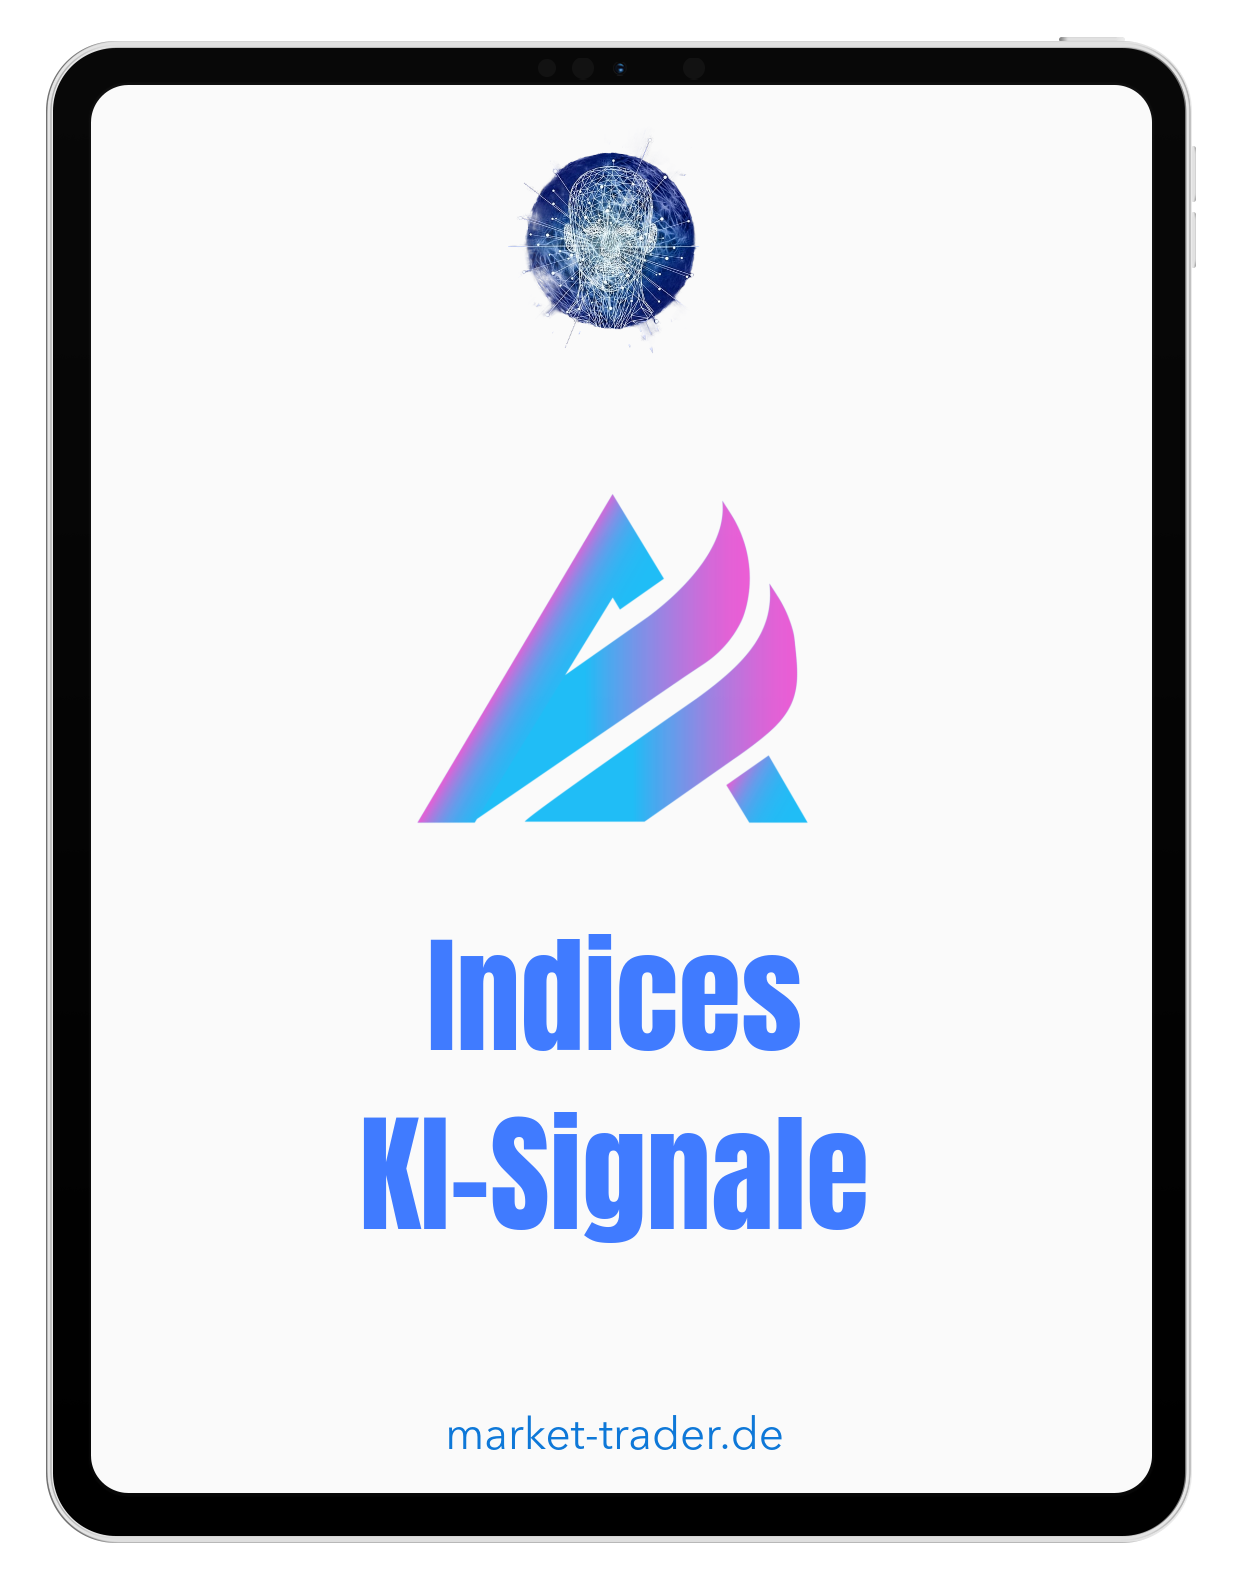 Indices KI Trading Signale